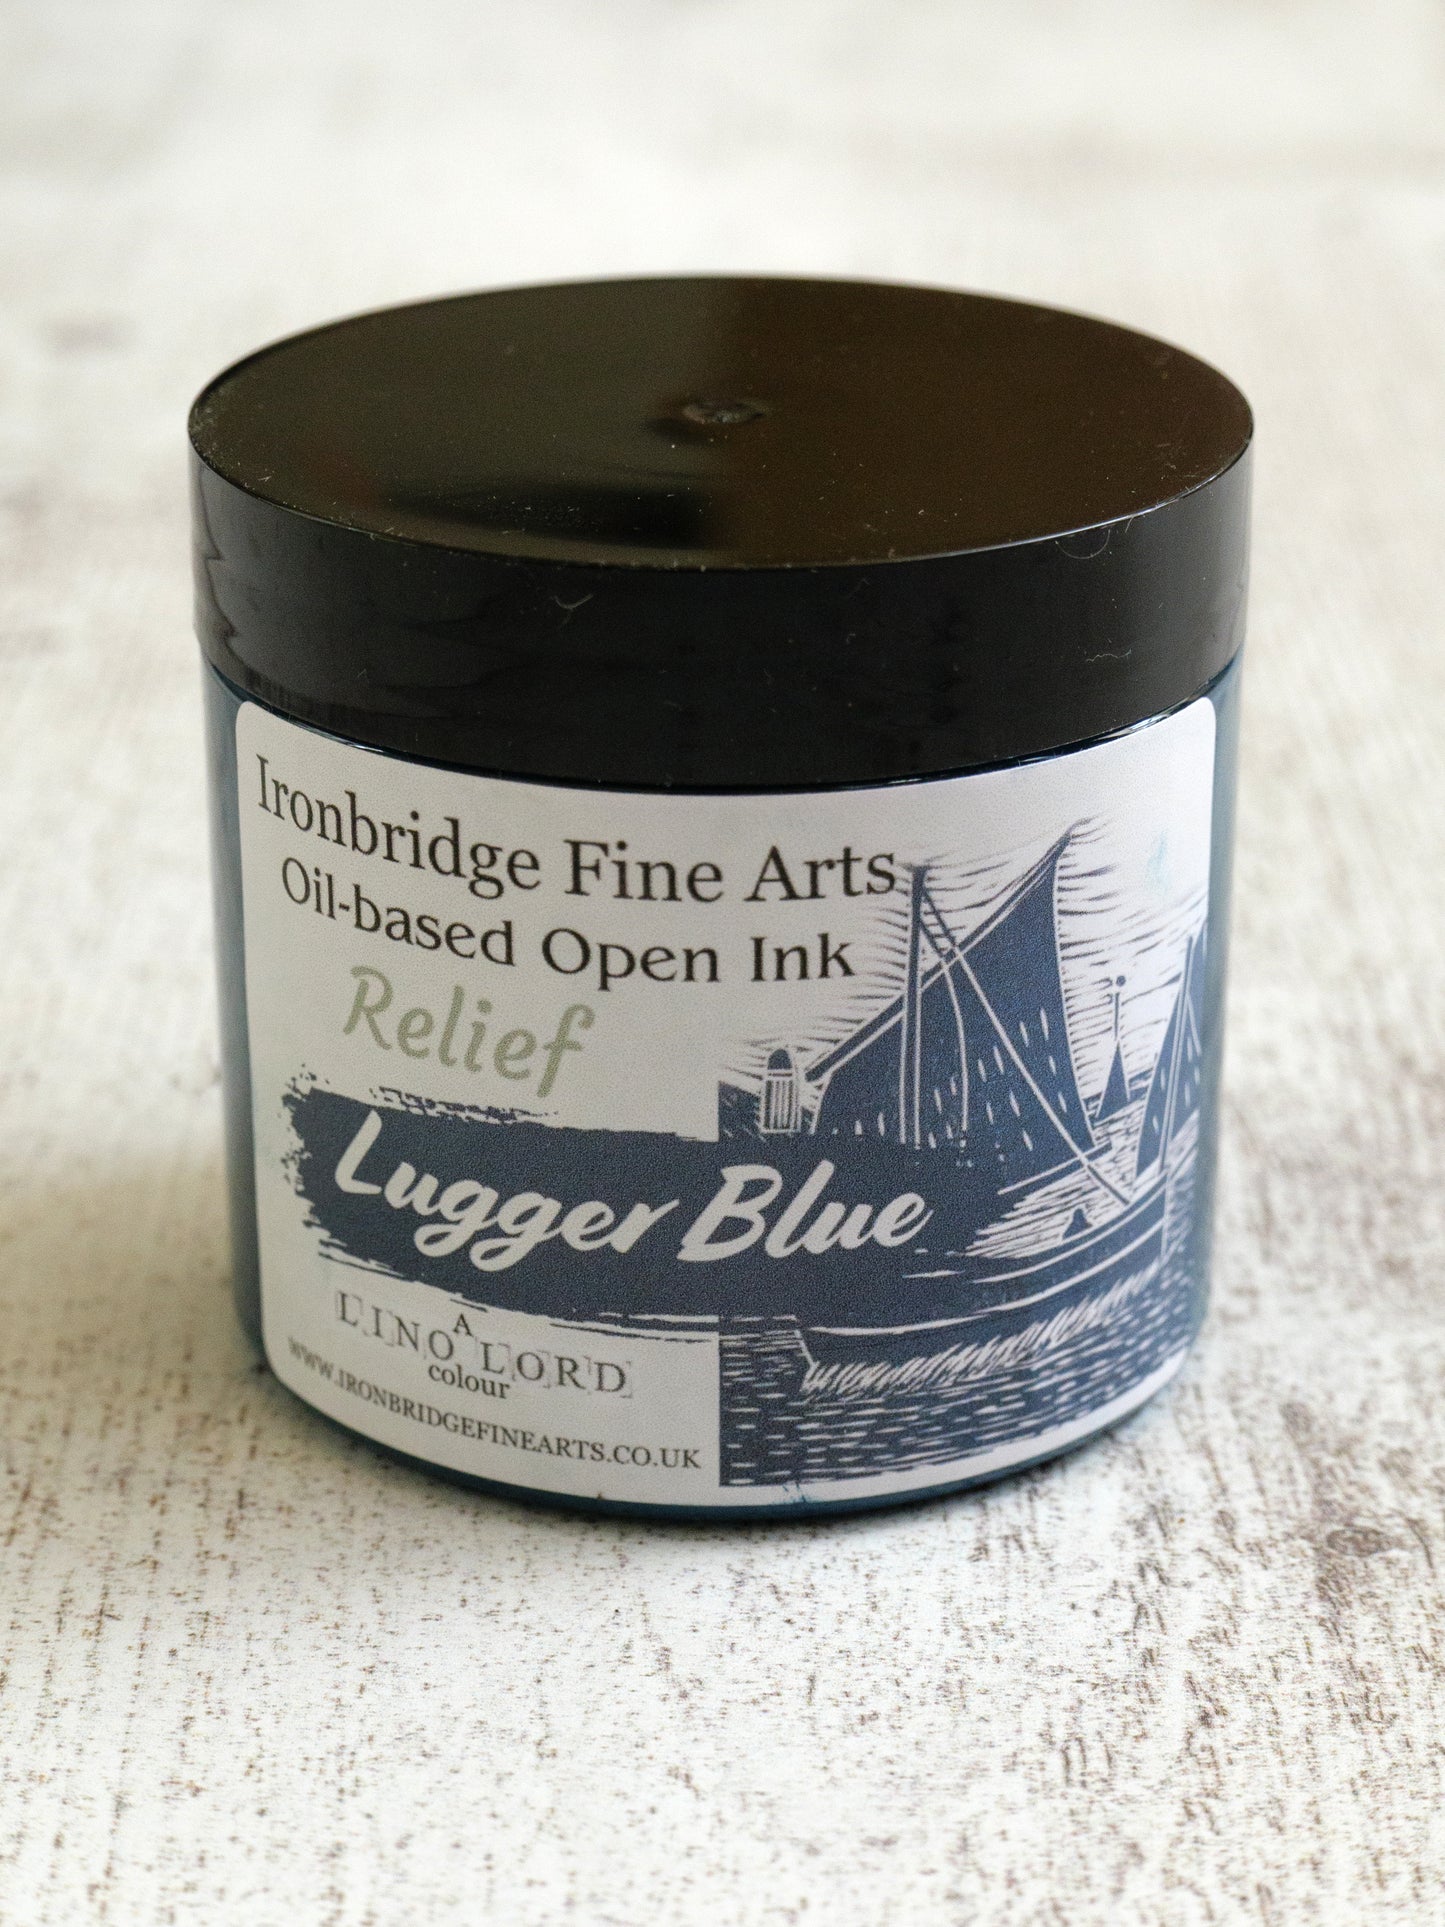 Lino Lord Lugger Blue Ink by Ironbridge Fine Arts